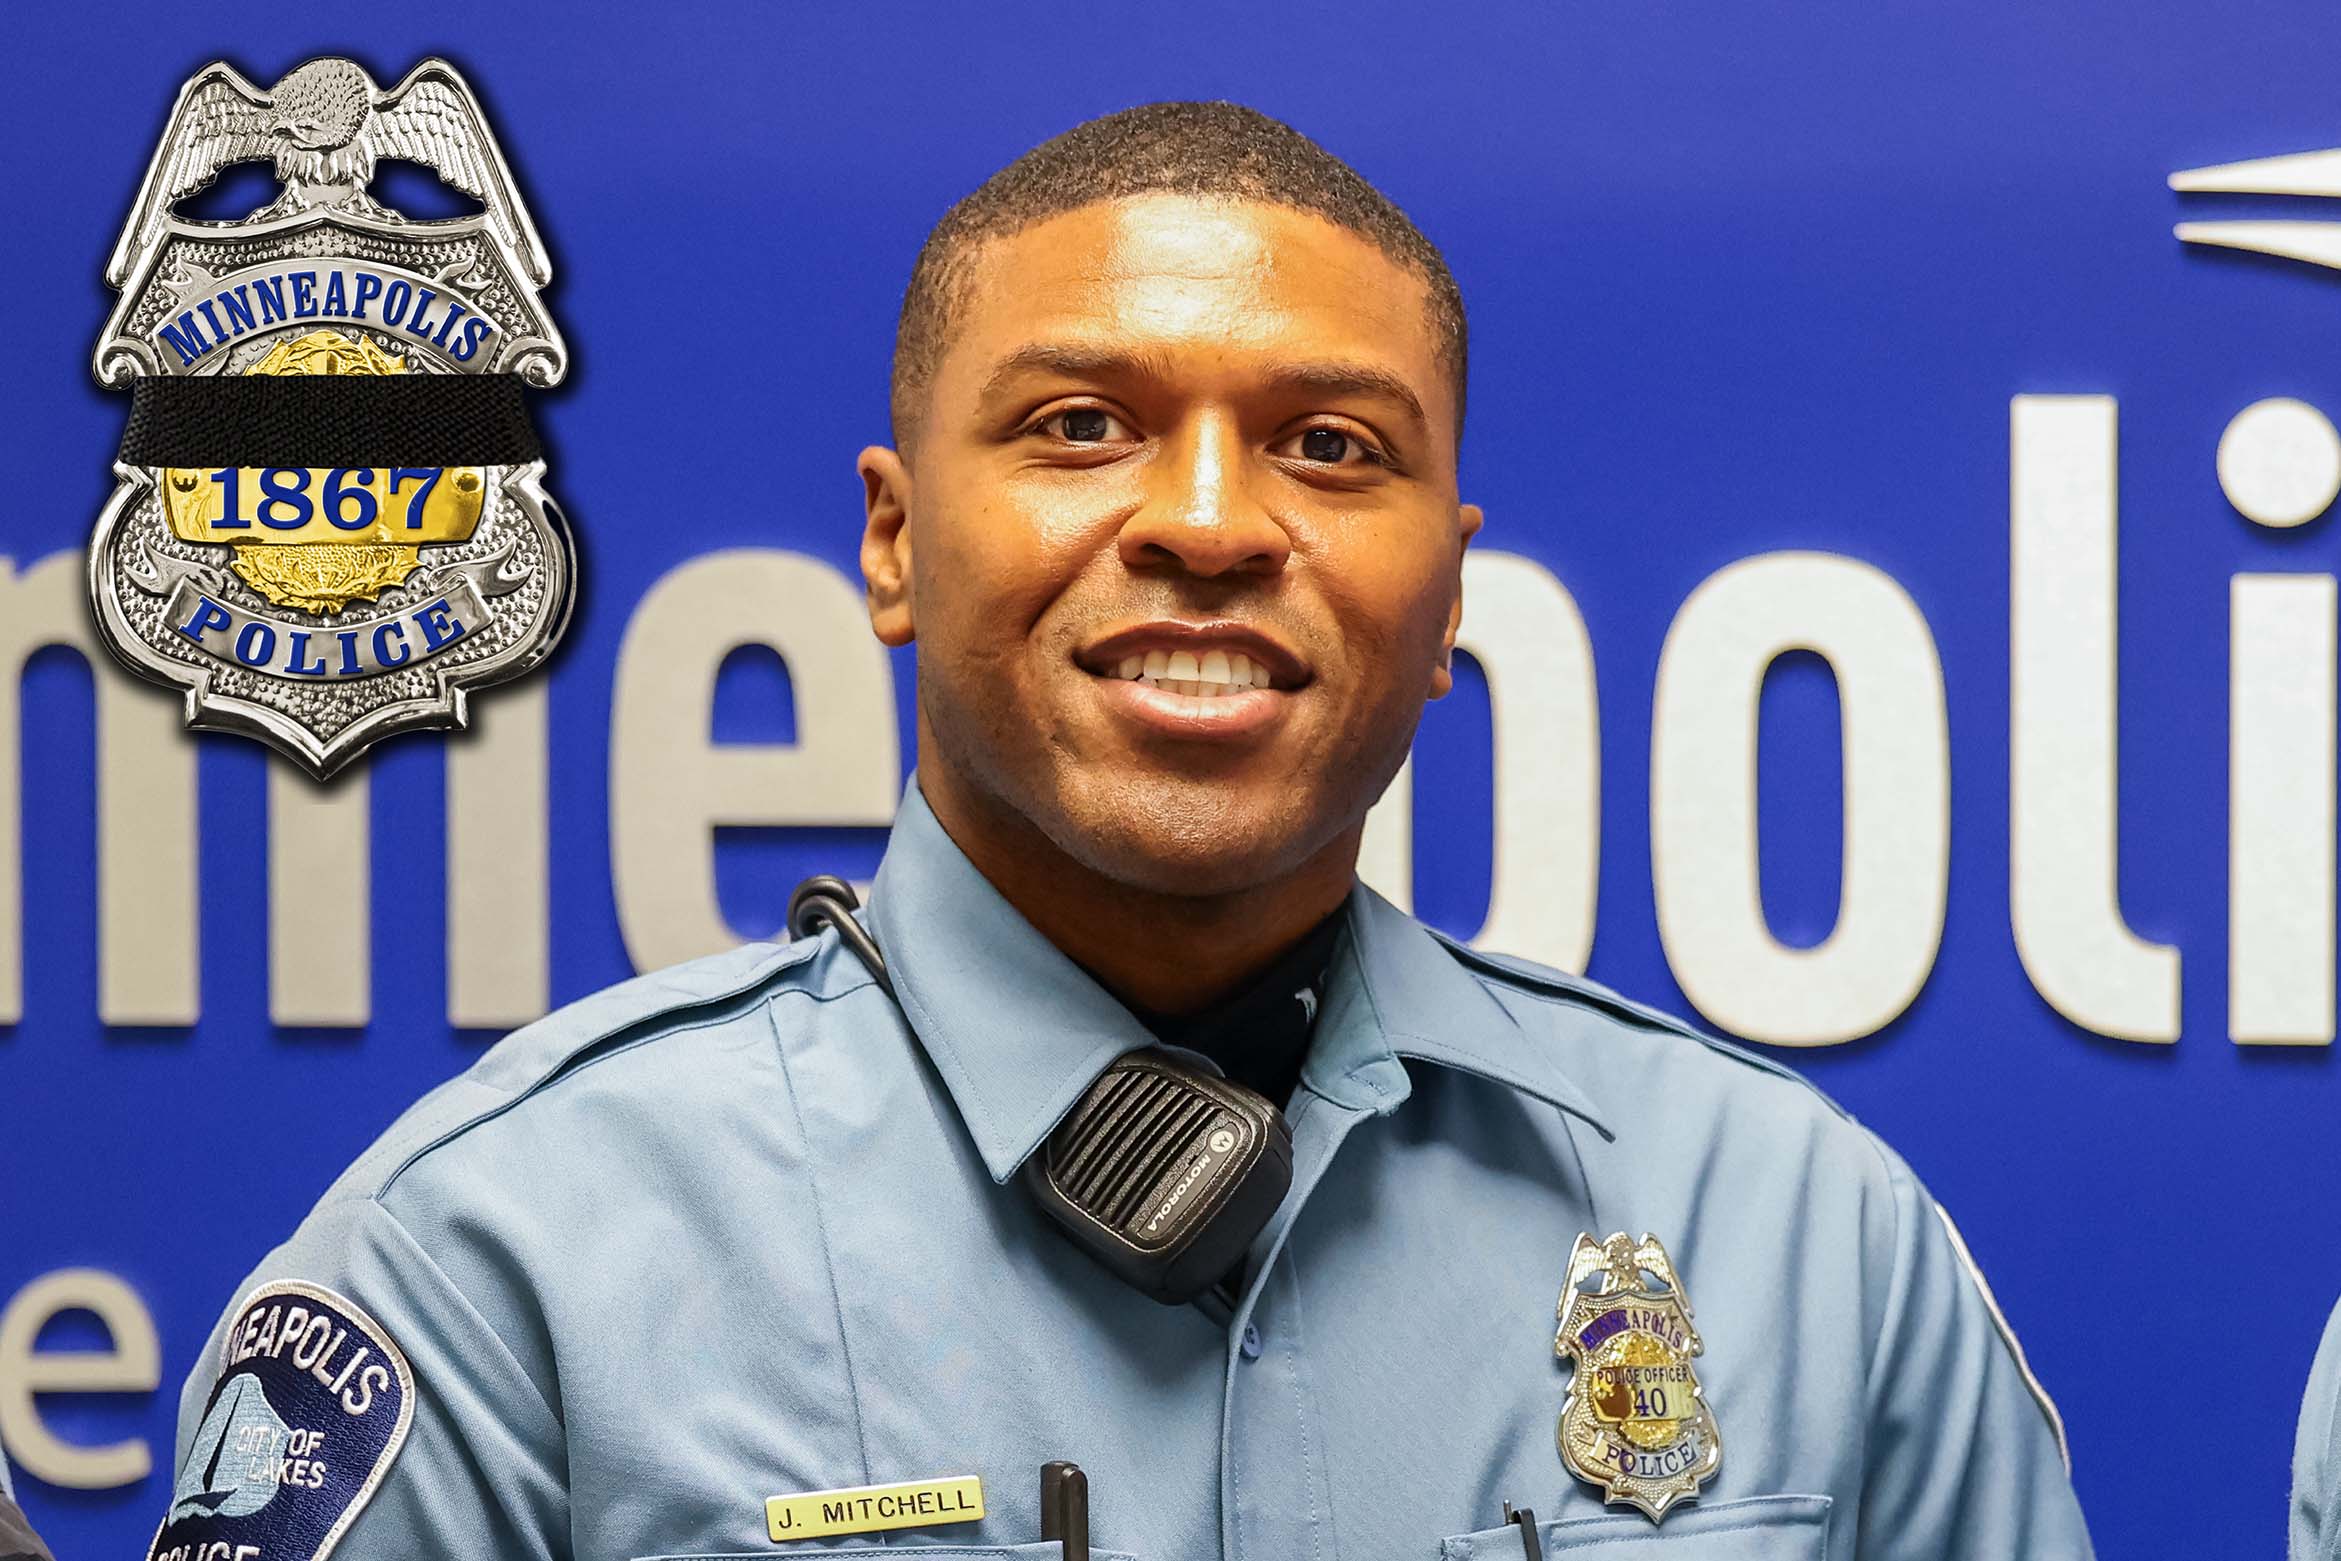 Officer Jamal Mitchell